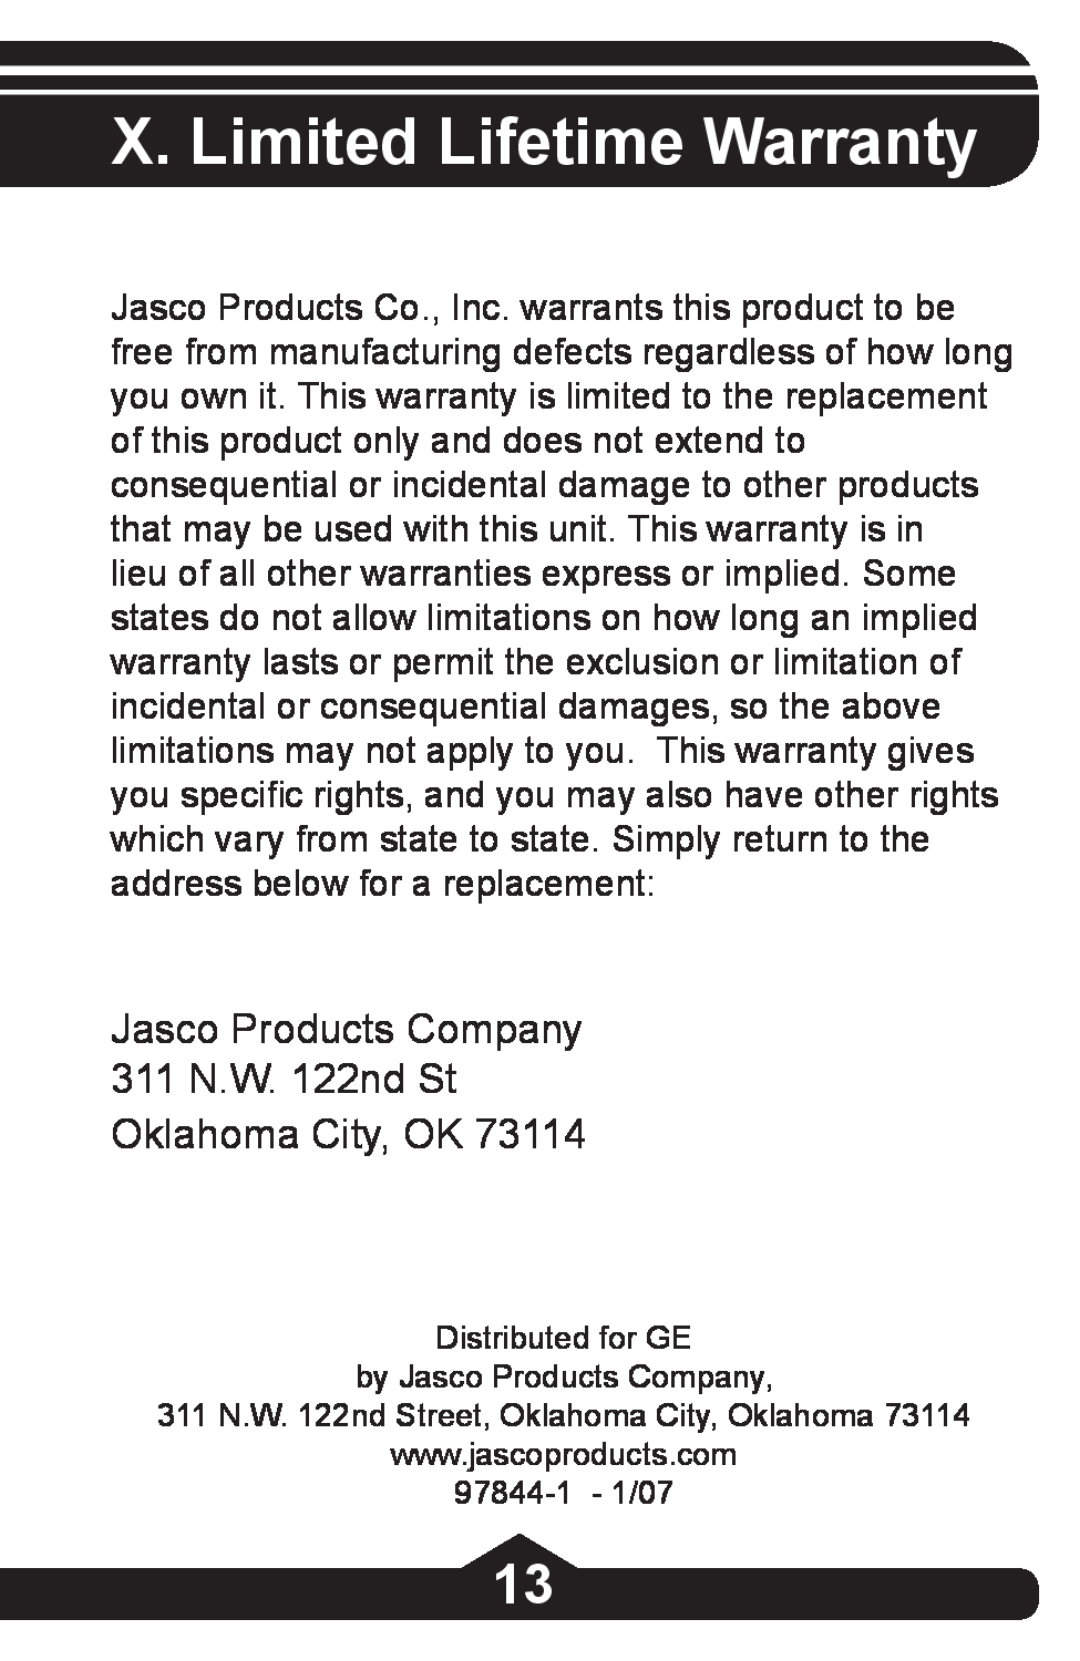 Jasco HO97844 instruction manual X. Limited Lifetime Warranty, Jasco Products Company 311 N.W. 122nd St Oklahoma City, OK 